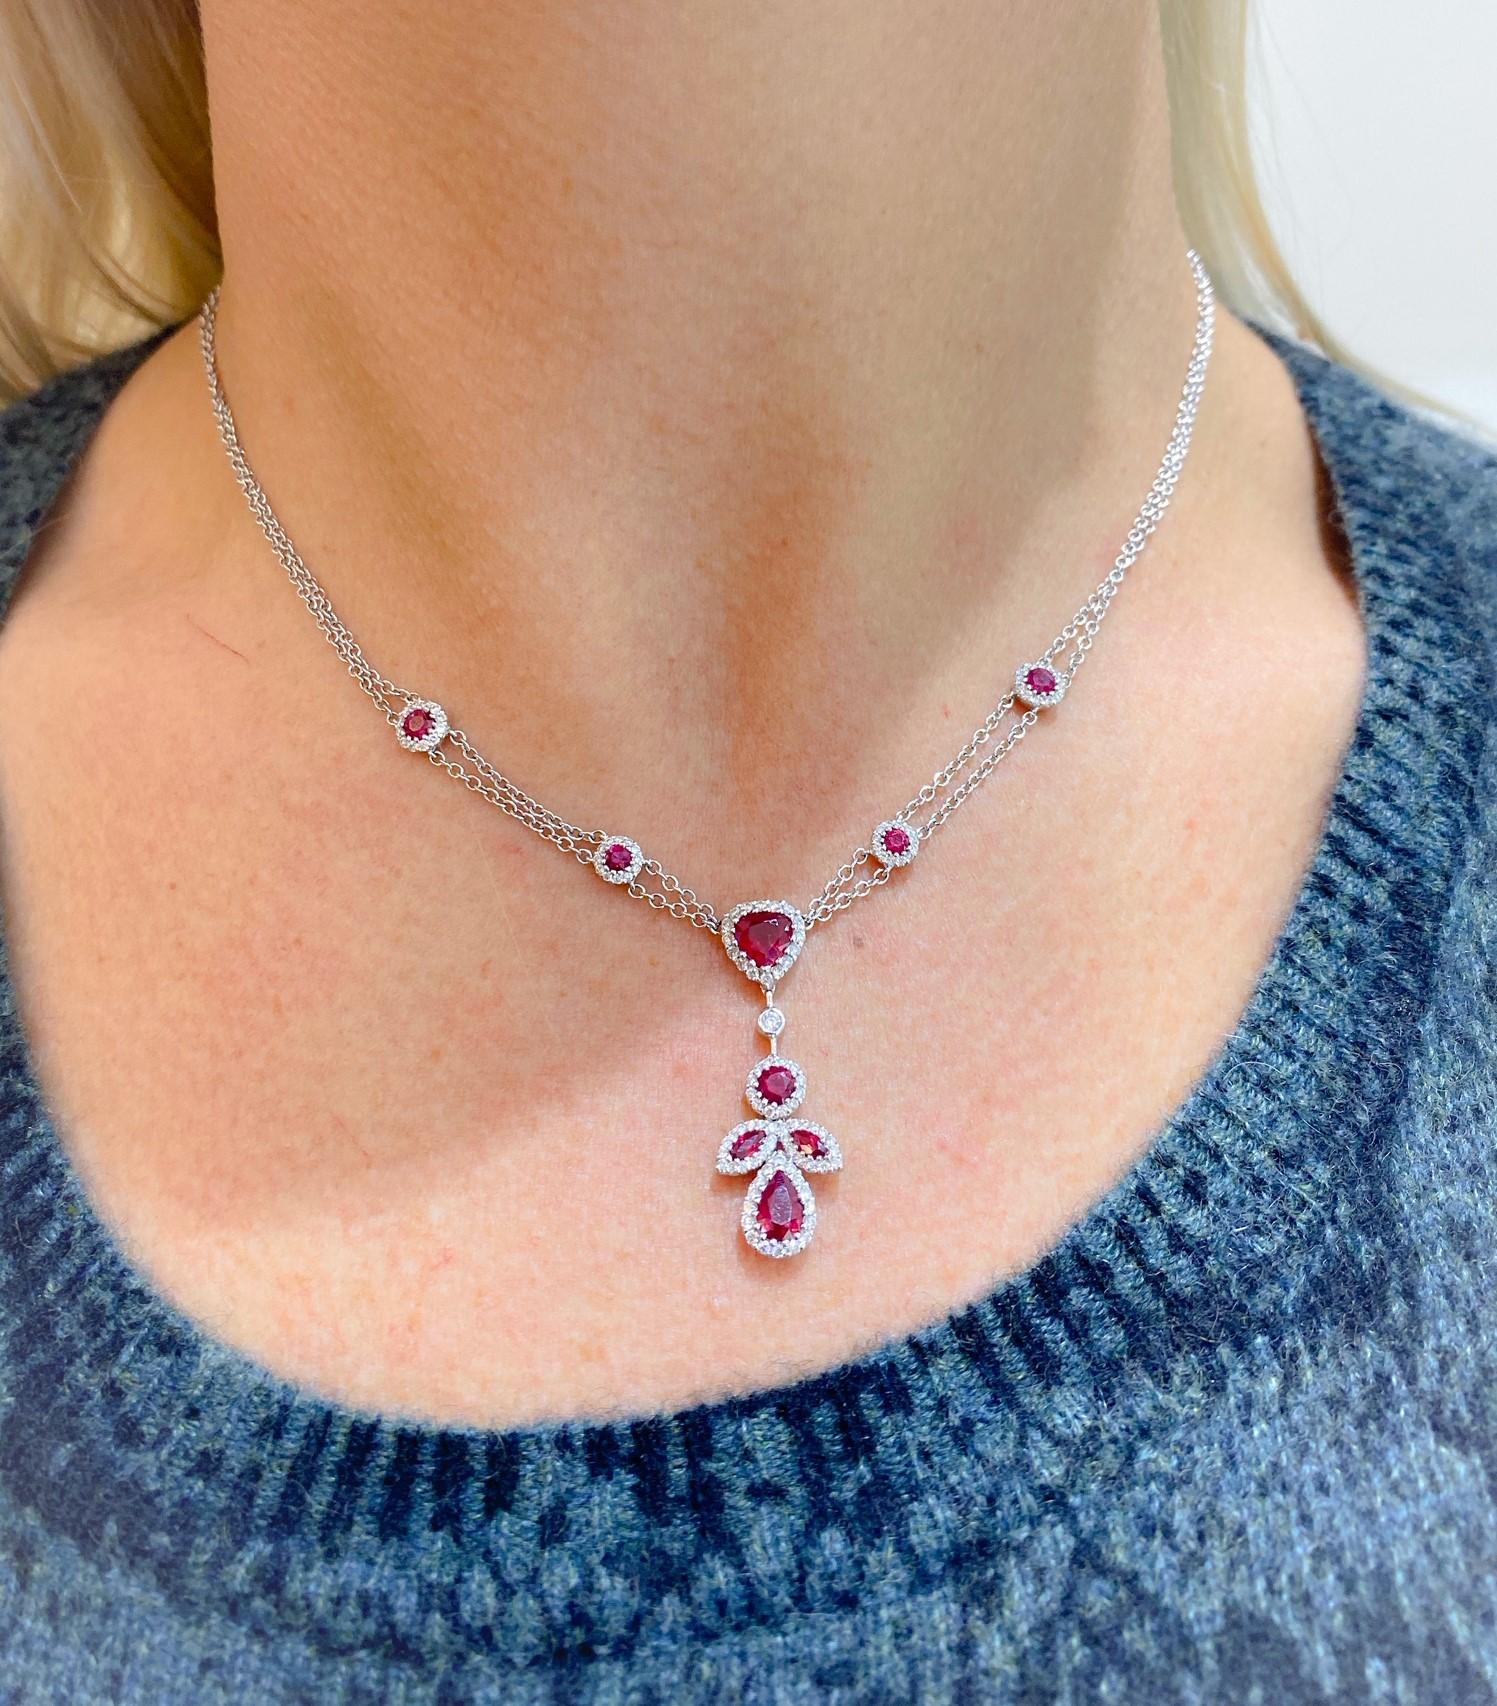 18 Karat White Gold Diamond Ruby Pendant Necklace In Excellent Condition For Sale In La Jolla, CA